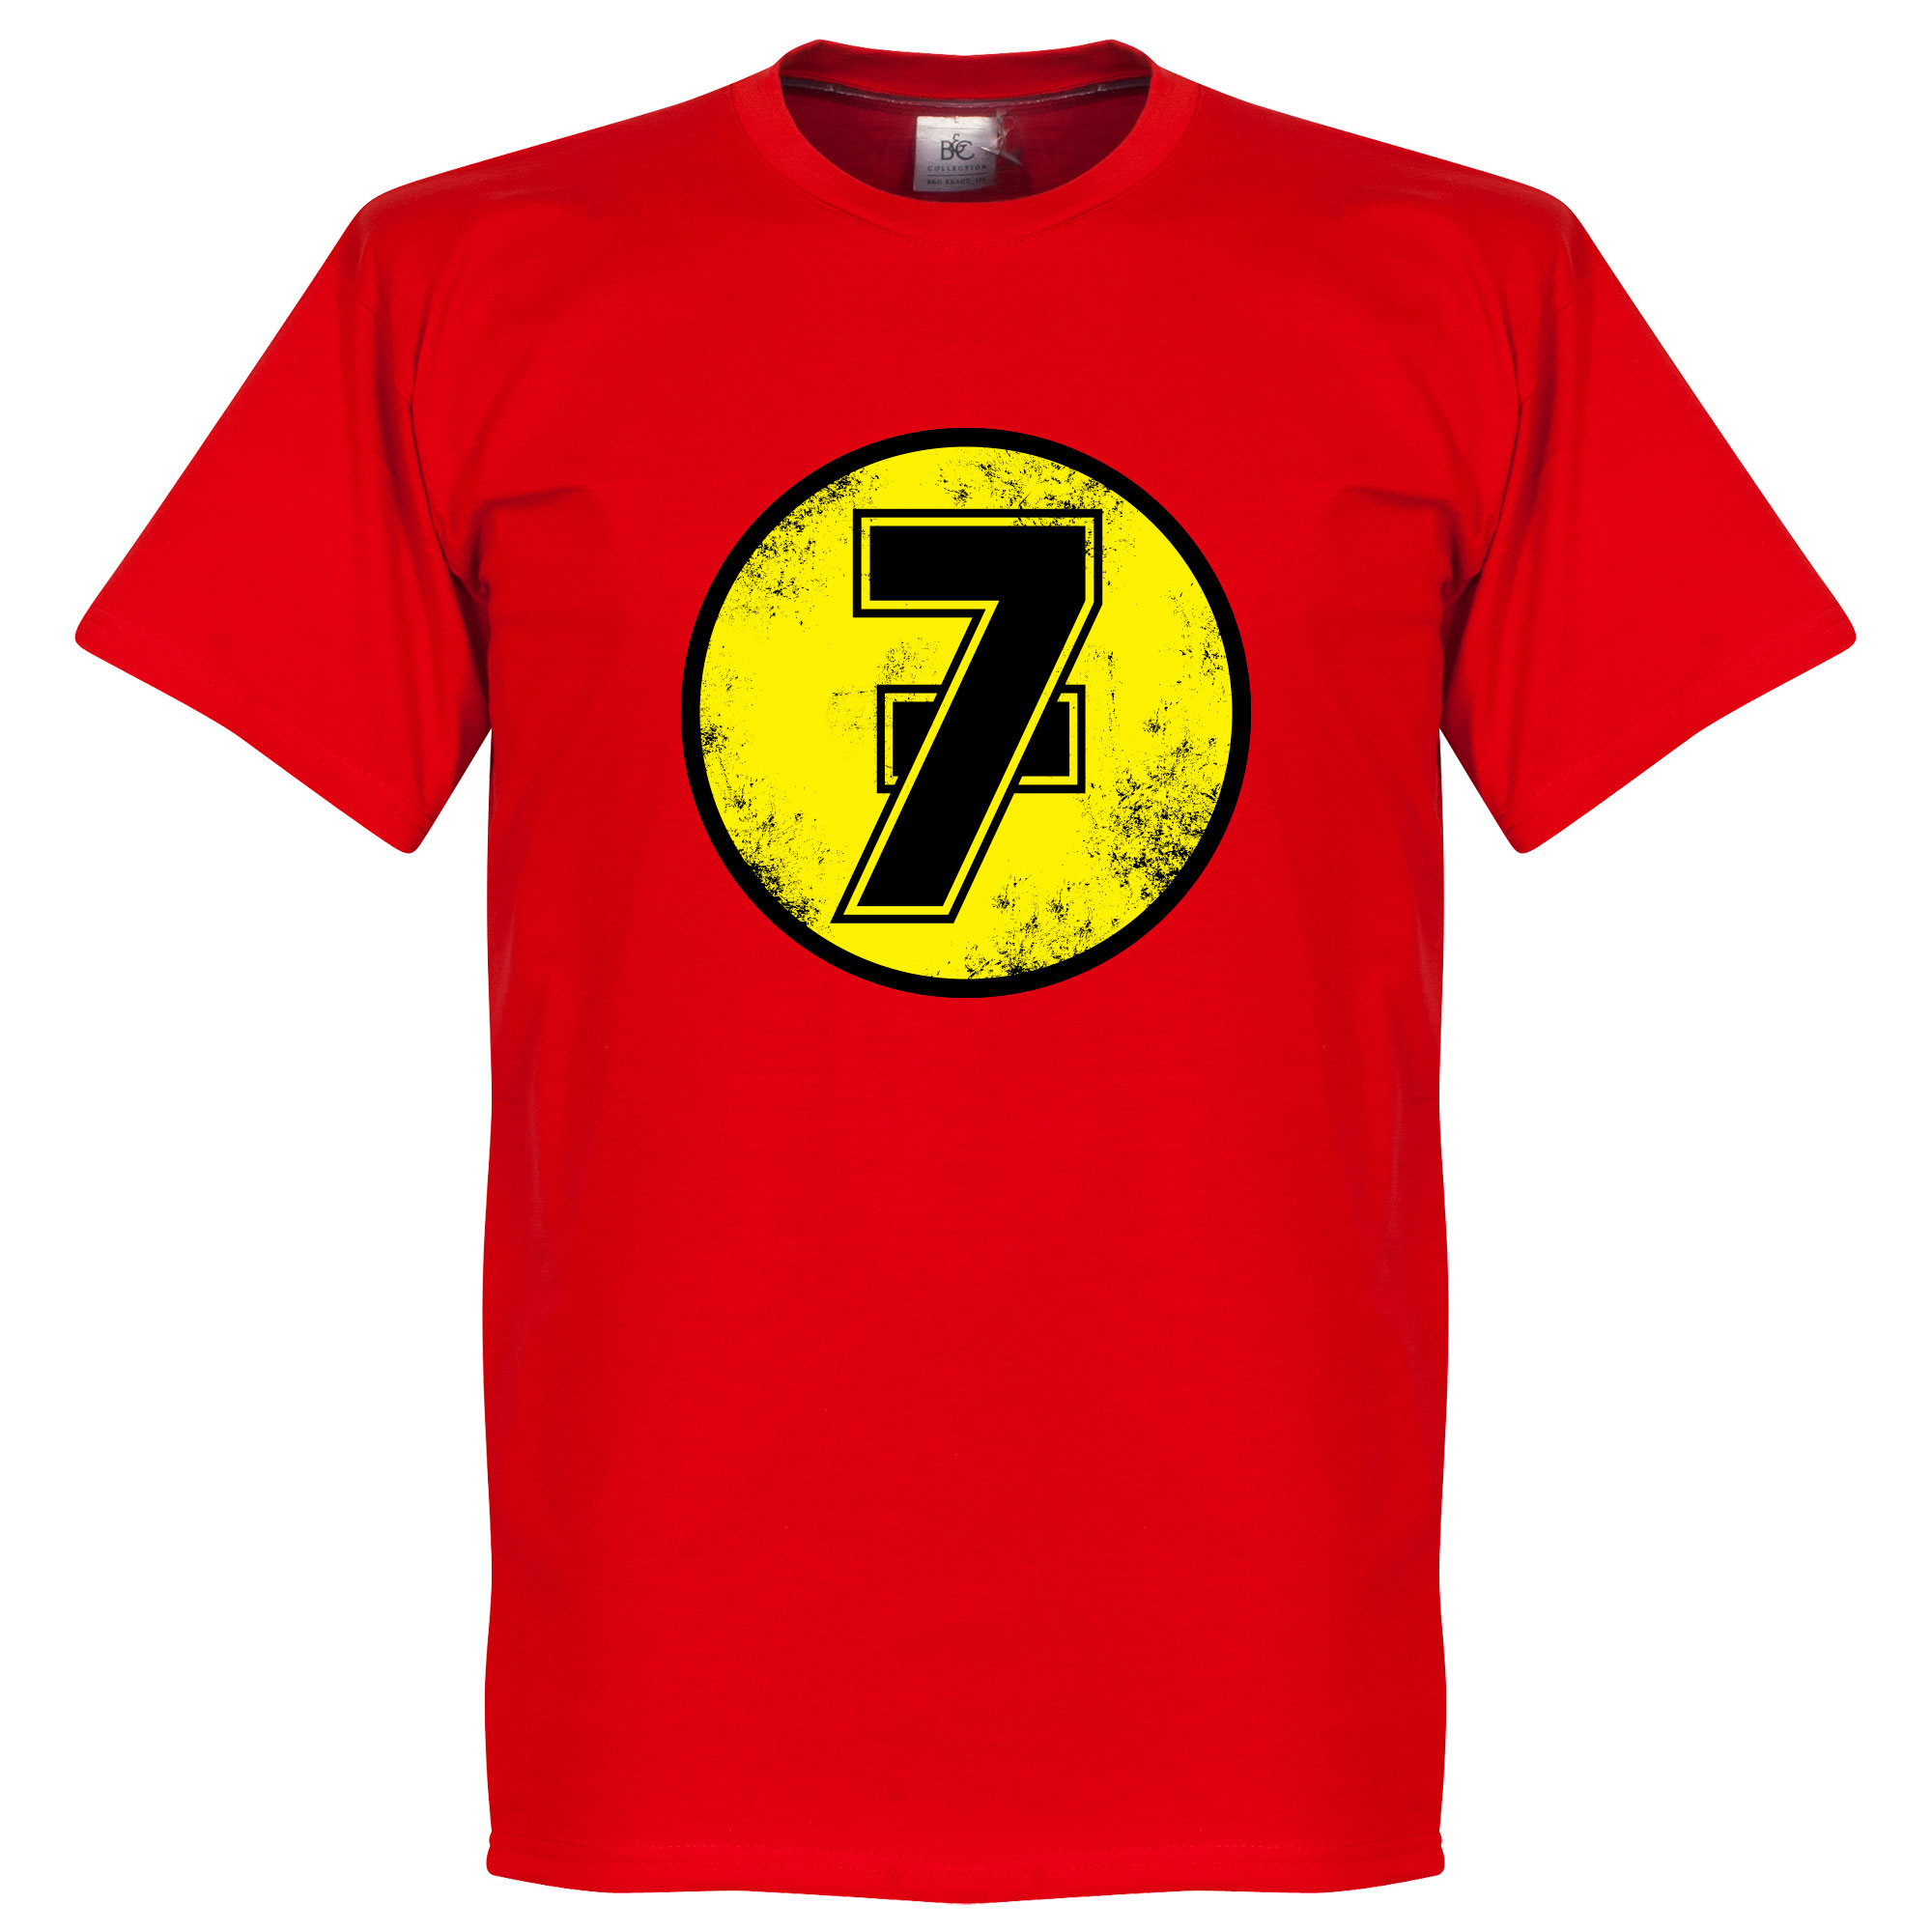 Barry Sheene No7 T-Shirt Rood